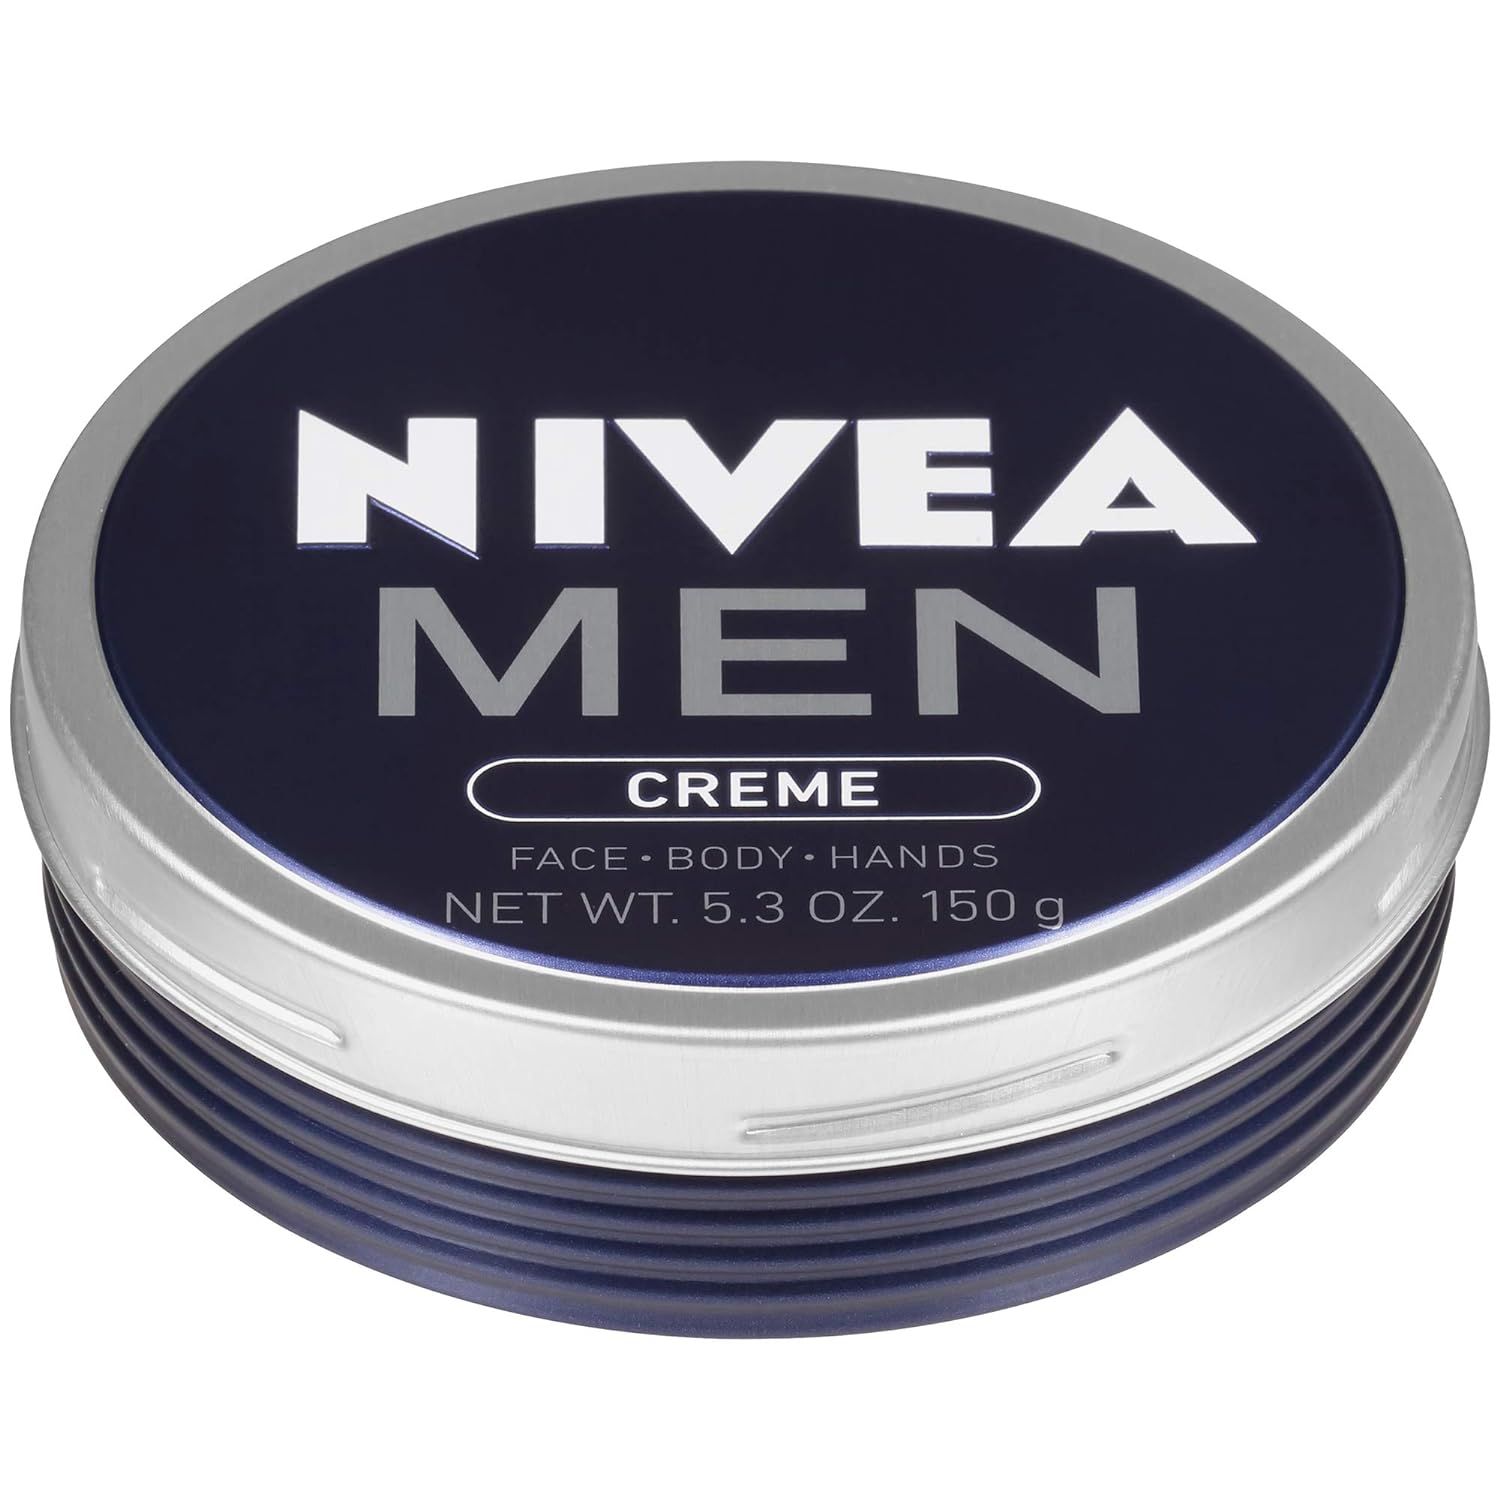 NIVEA Men Creme - Multipurpose Cream for Men - Face, hand and Body Lotion - 5.3 oz. Tin | Amazon (US)